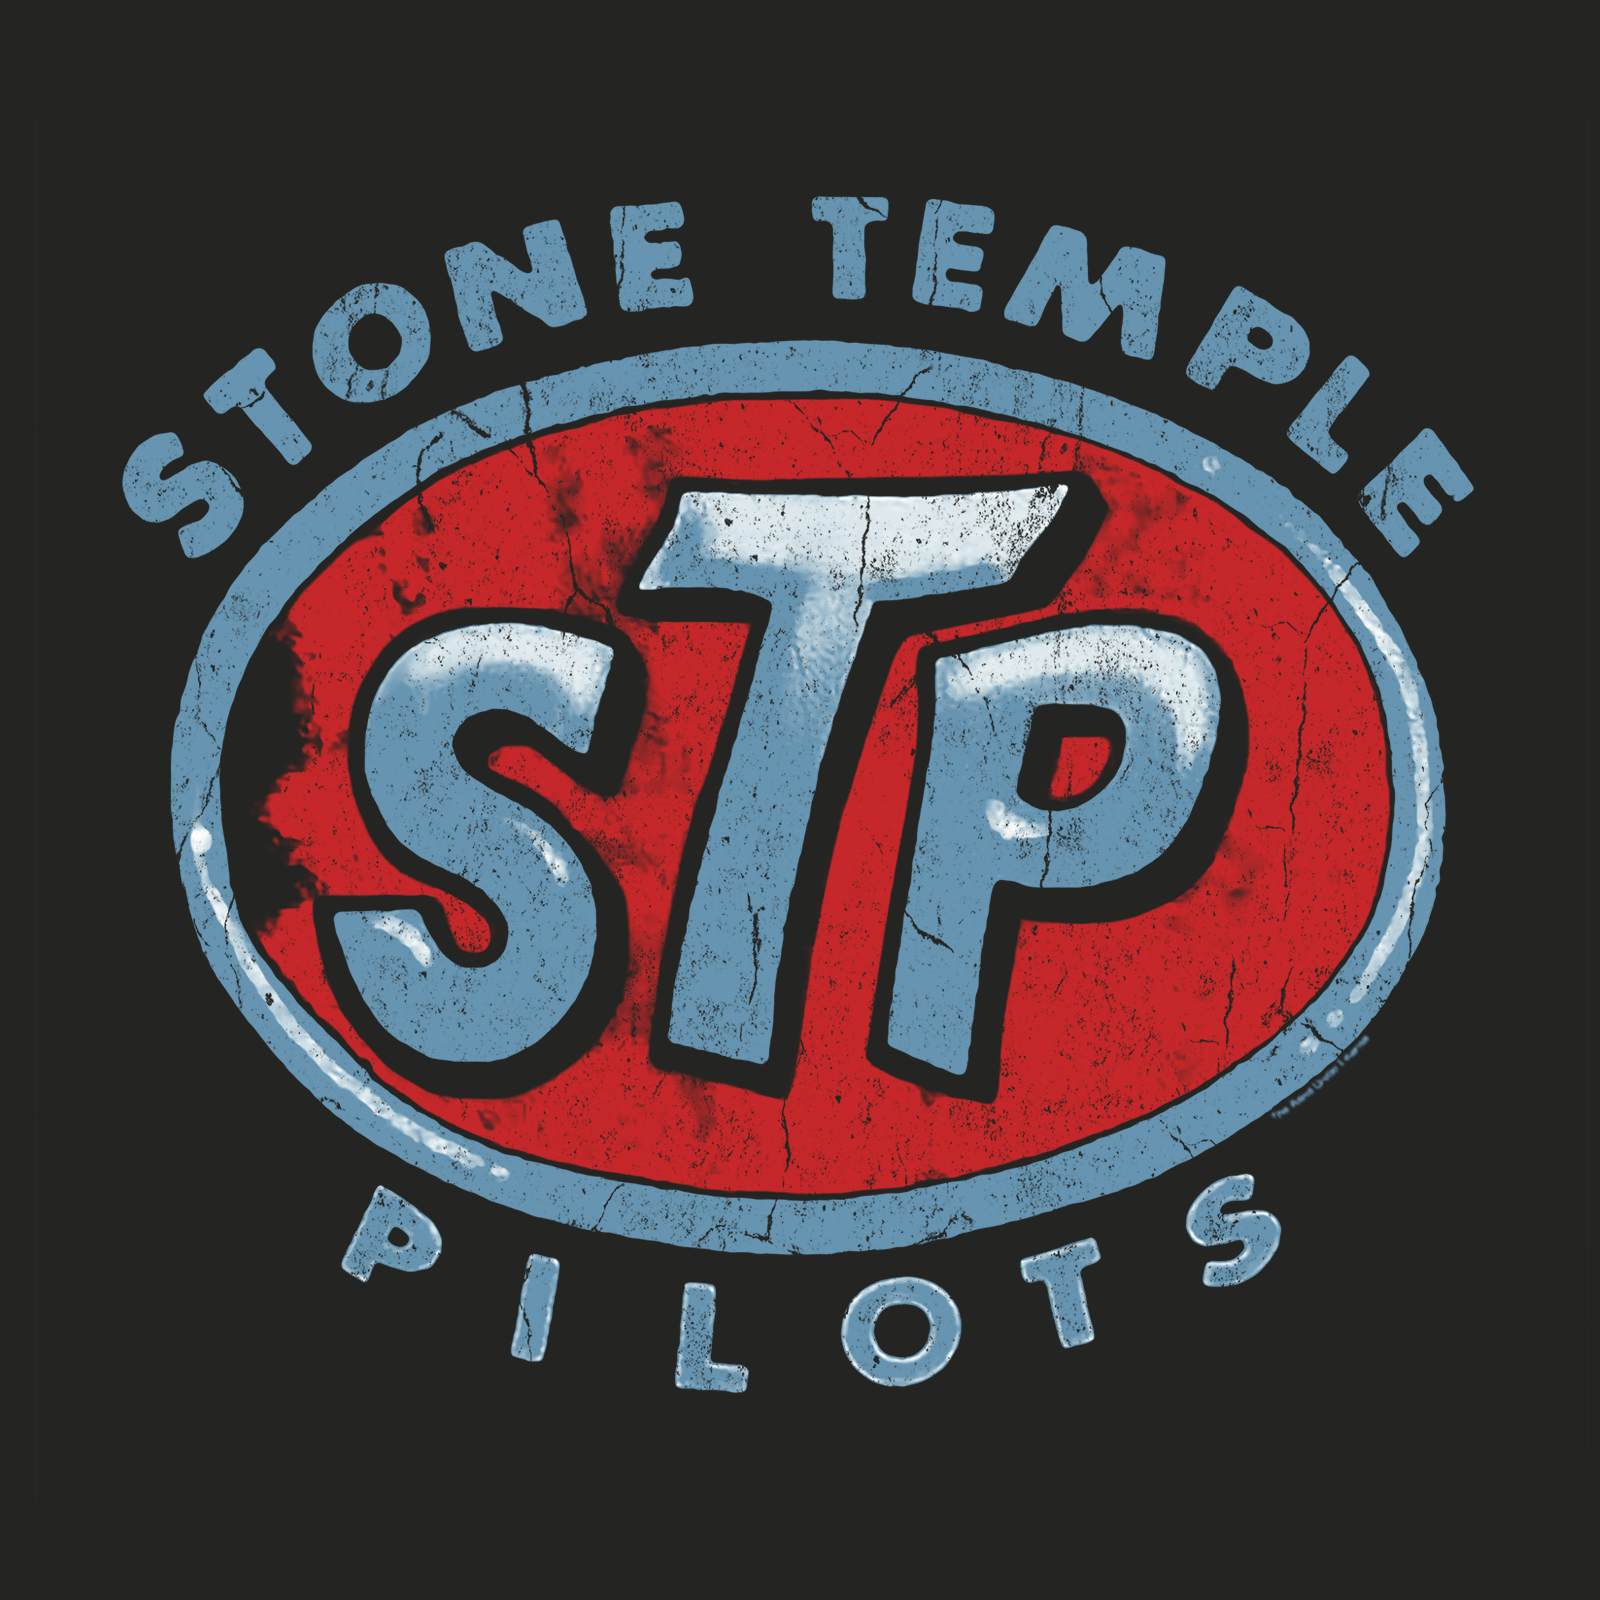 stone temple pilots